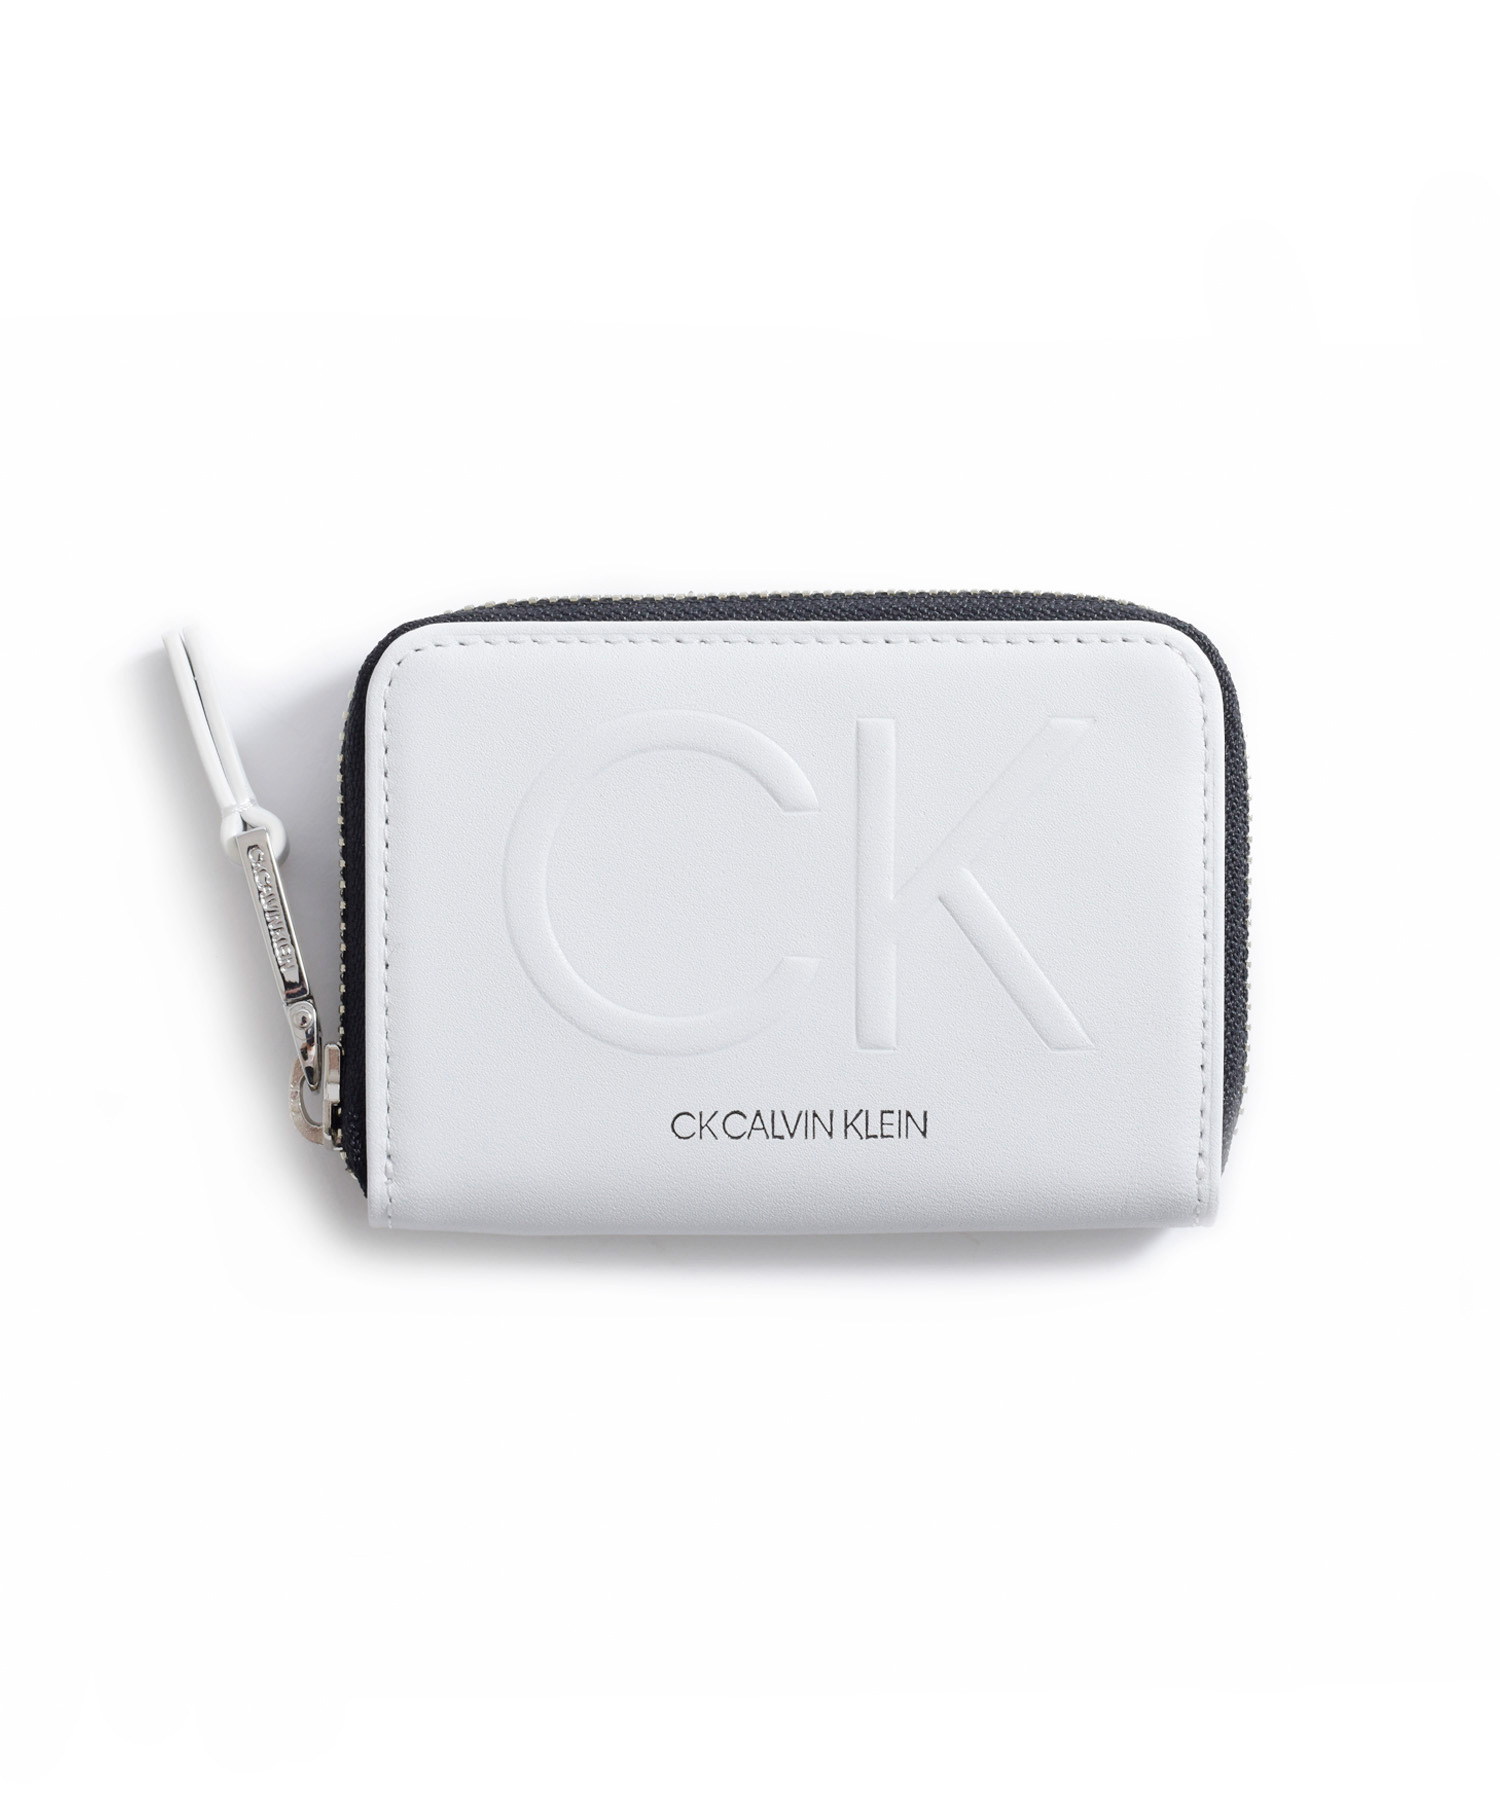 ck Calvin Klein(ck カルバン・クライン)CKカルバン・クライン ロゴス 小銭入れ No.816651を販売。ギフト包装無料